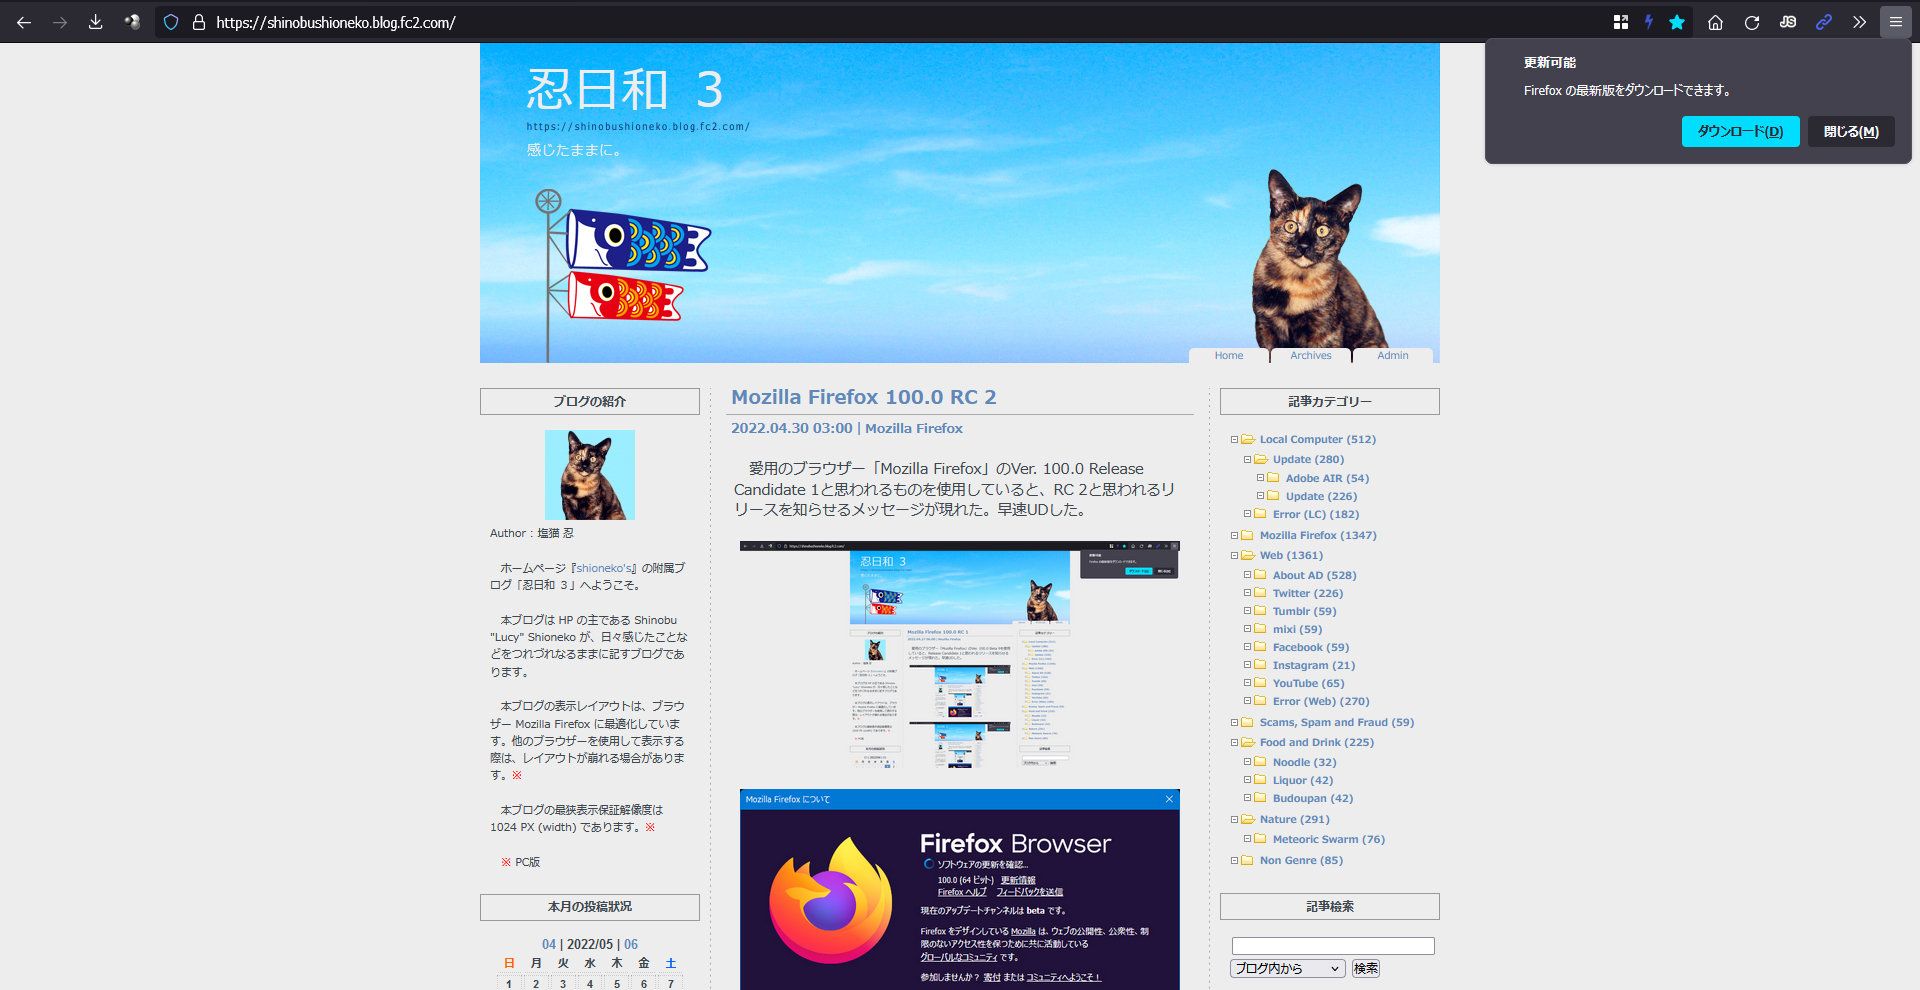 Mozilla Firefox 101.0 Beta 1